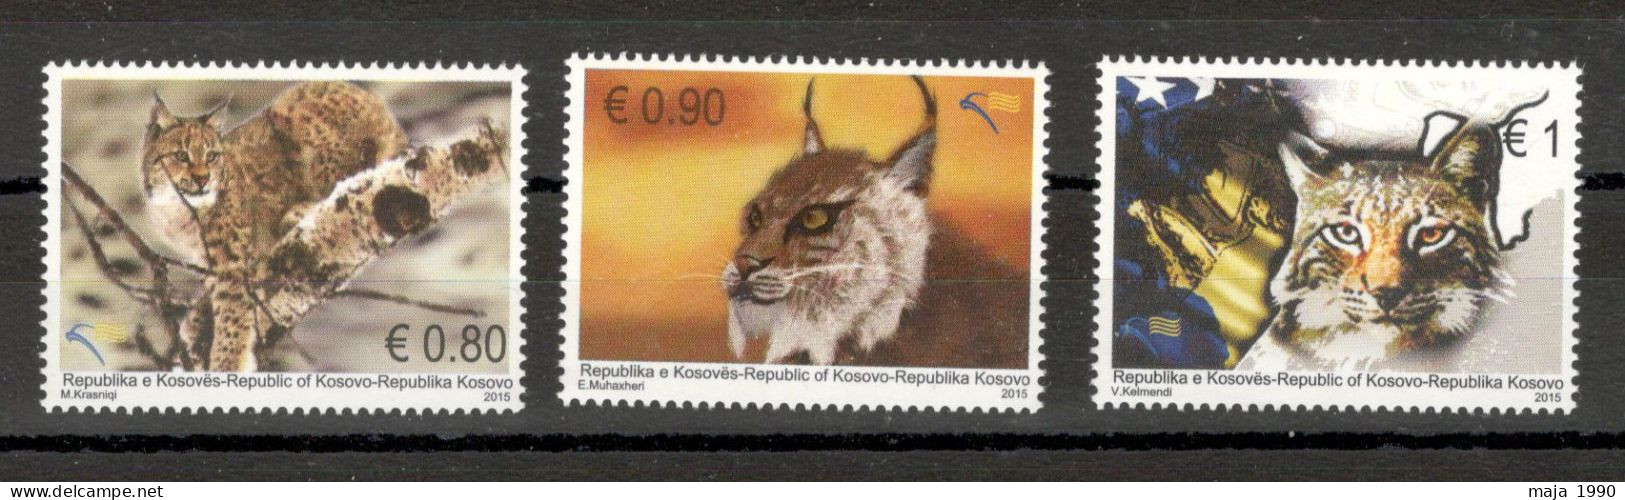 KOSOVO - MNH SET - FAUNA - WILD ANIMALS - BALKAN Lynx - 2015. - Kosovo